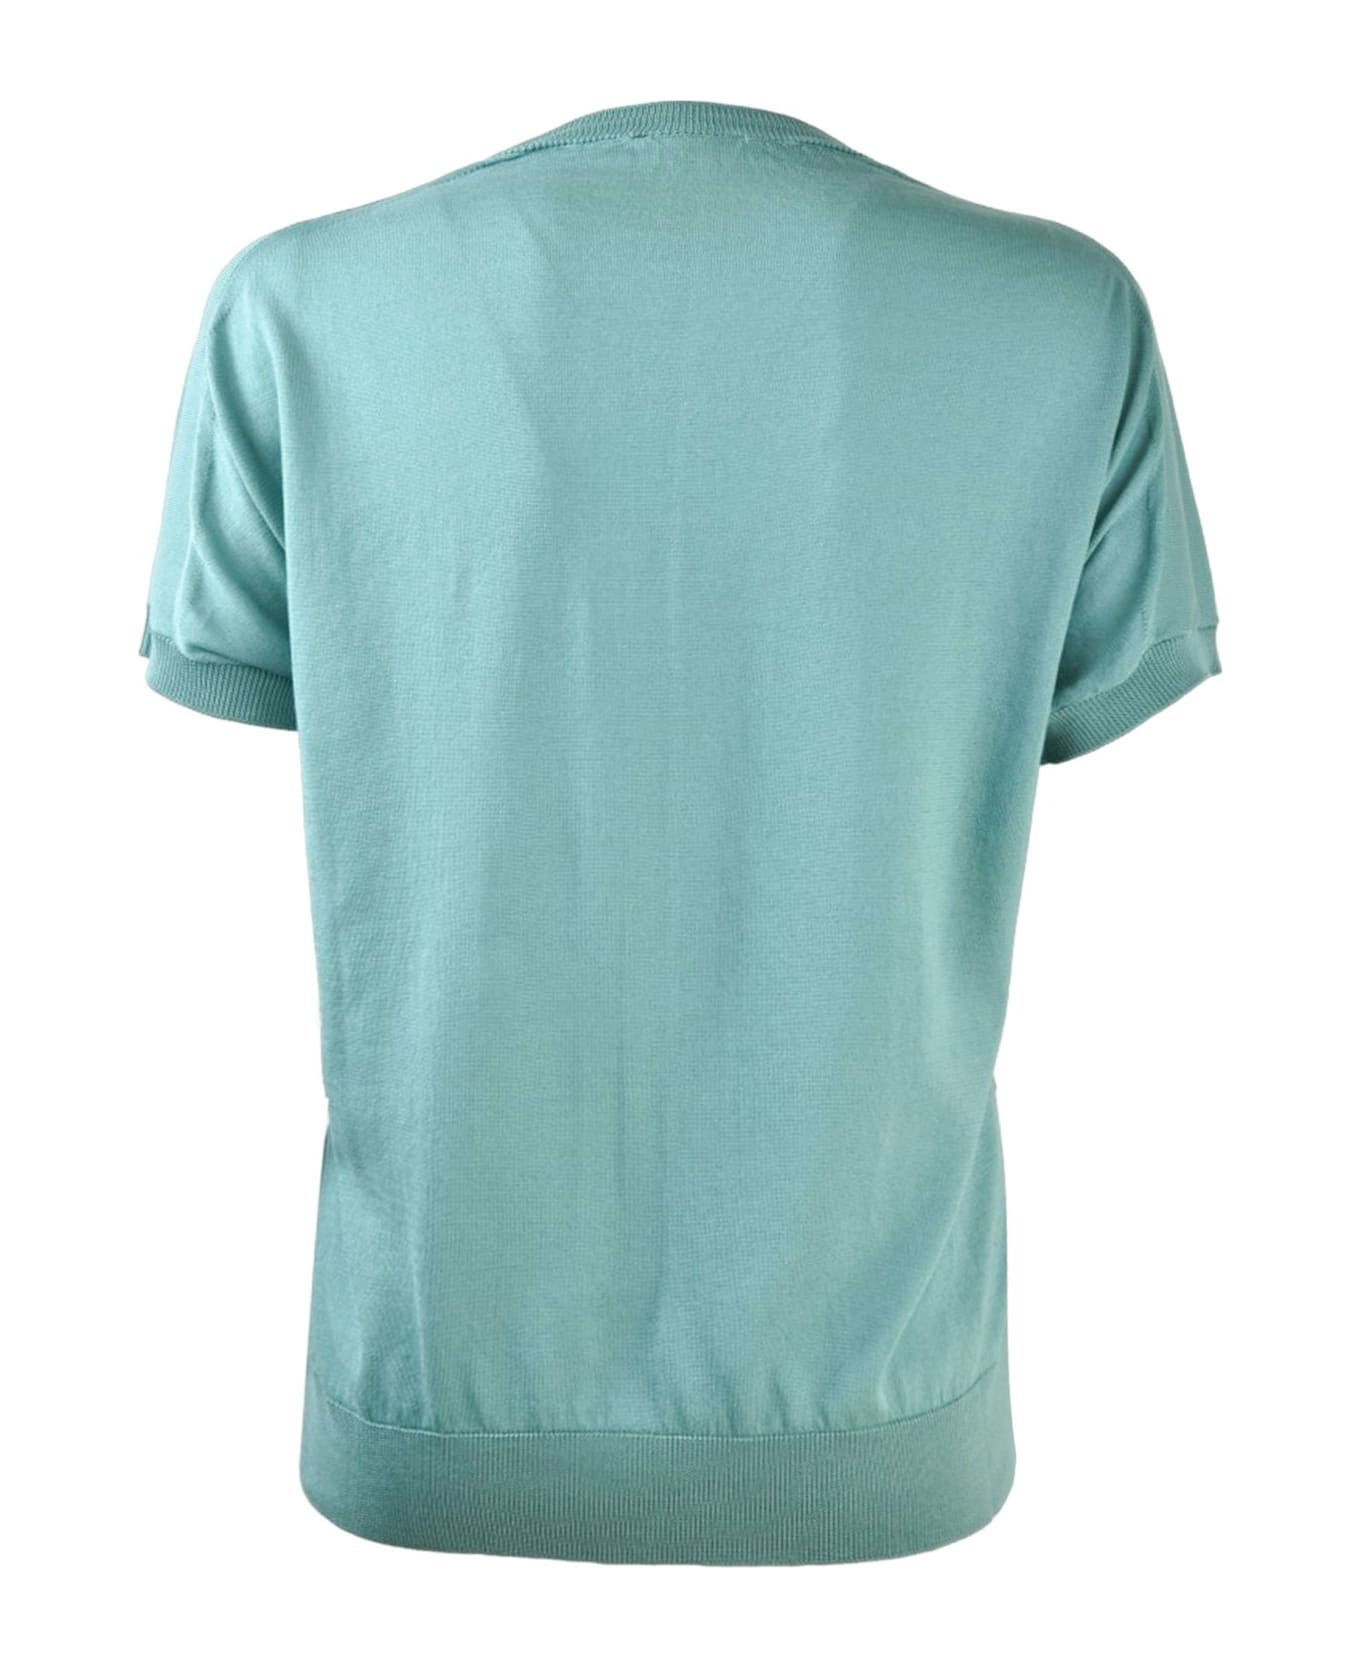 SEMICOUTURE Aquamarine Cotton Sweater - Green